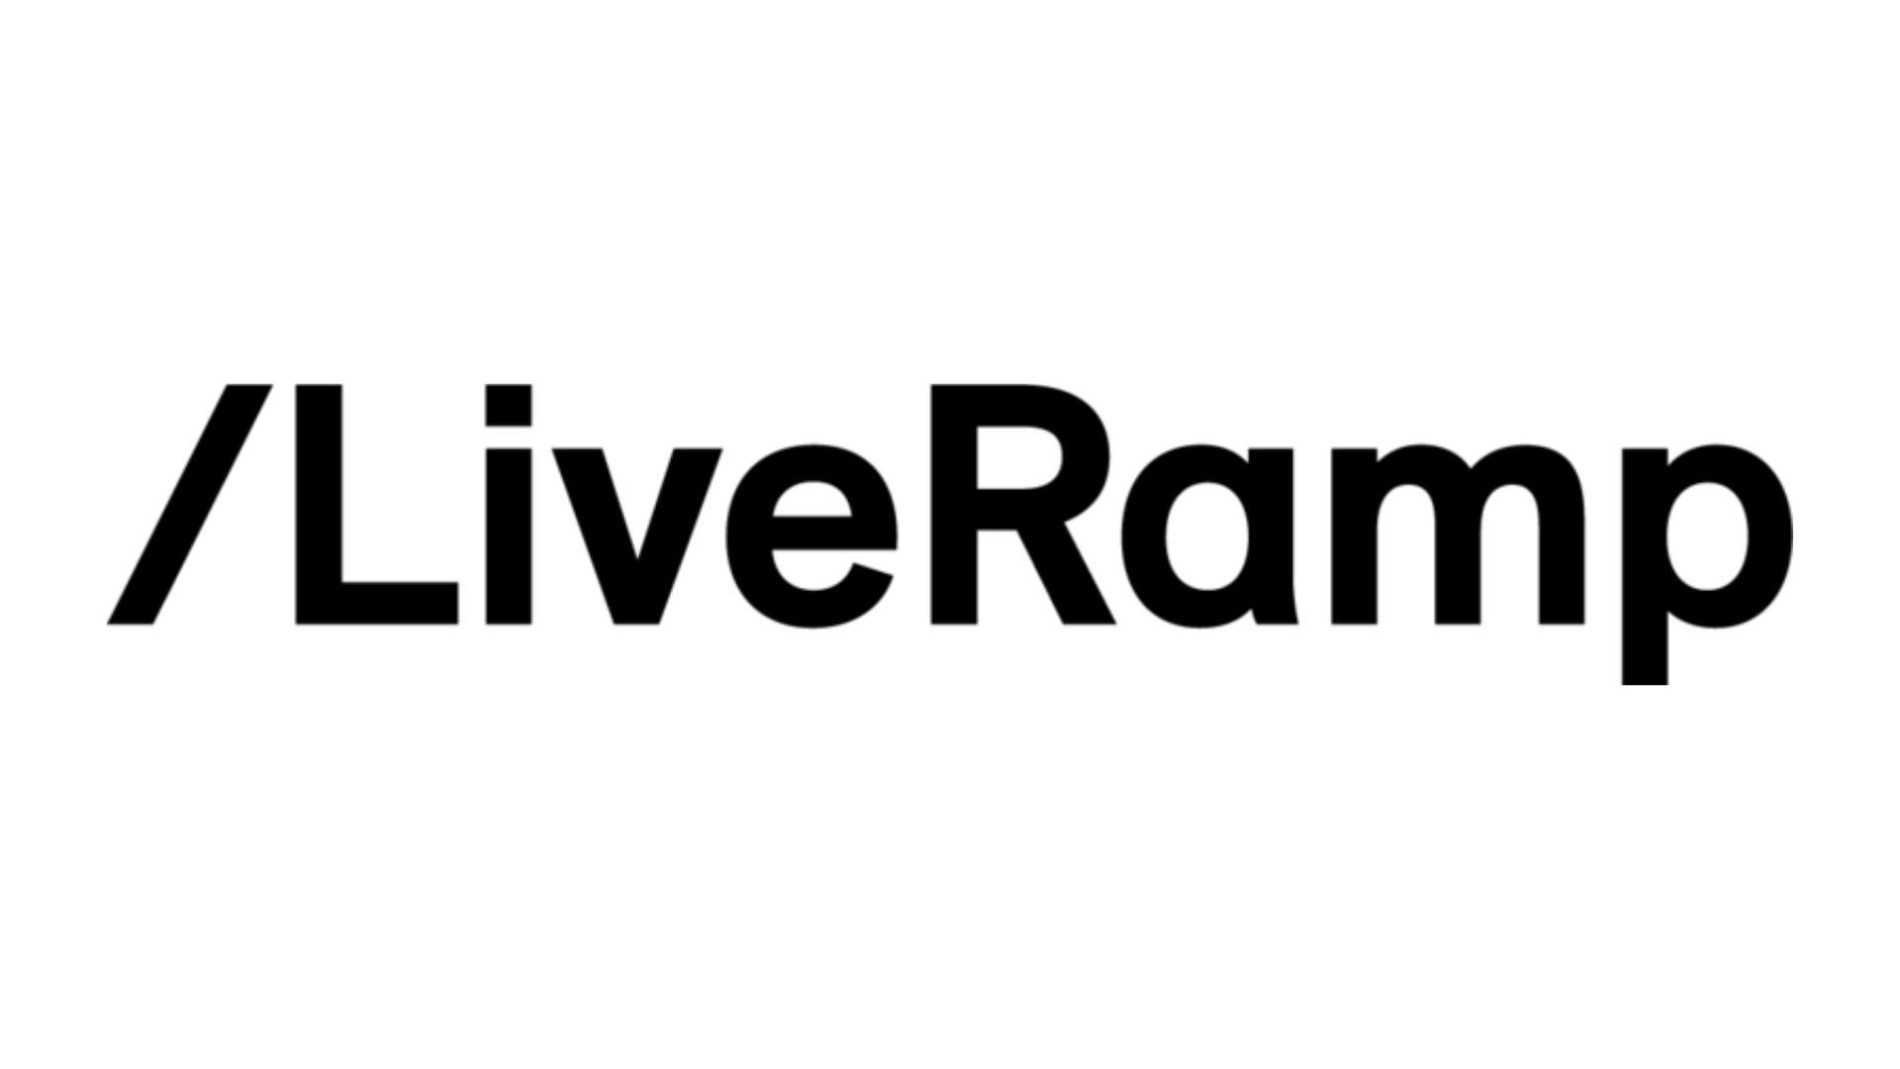 LiveRamp Software Company and Pulse Recruitment